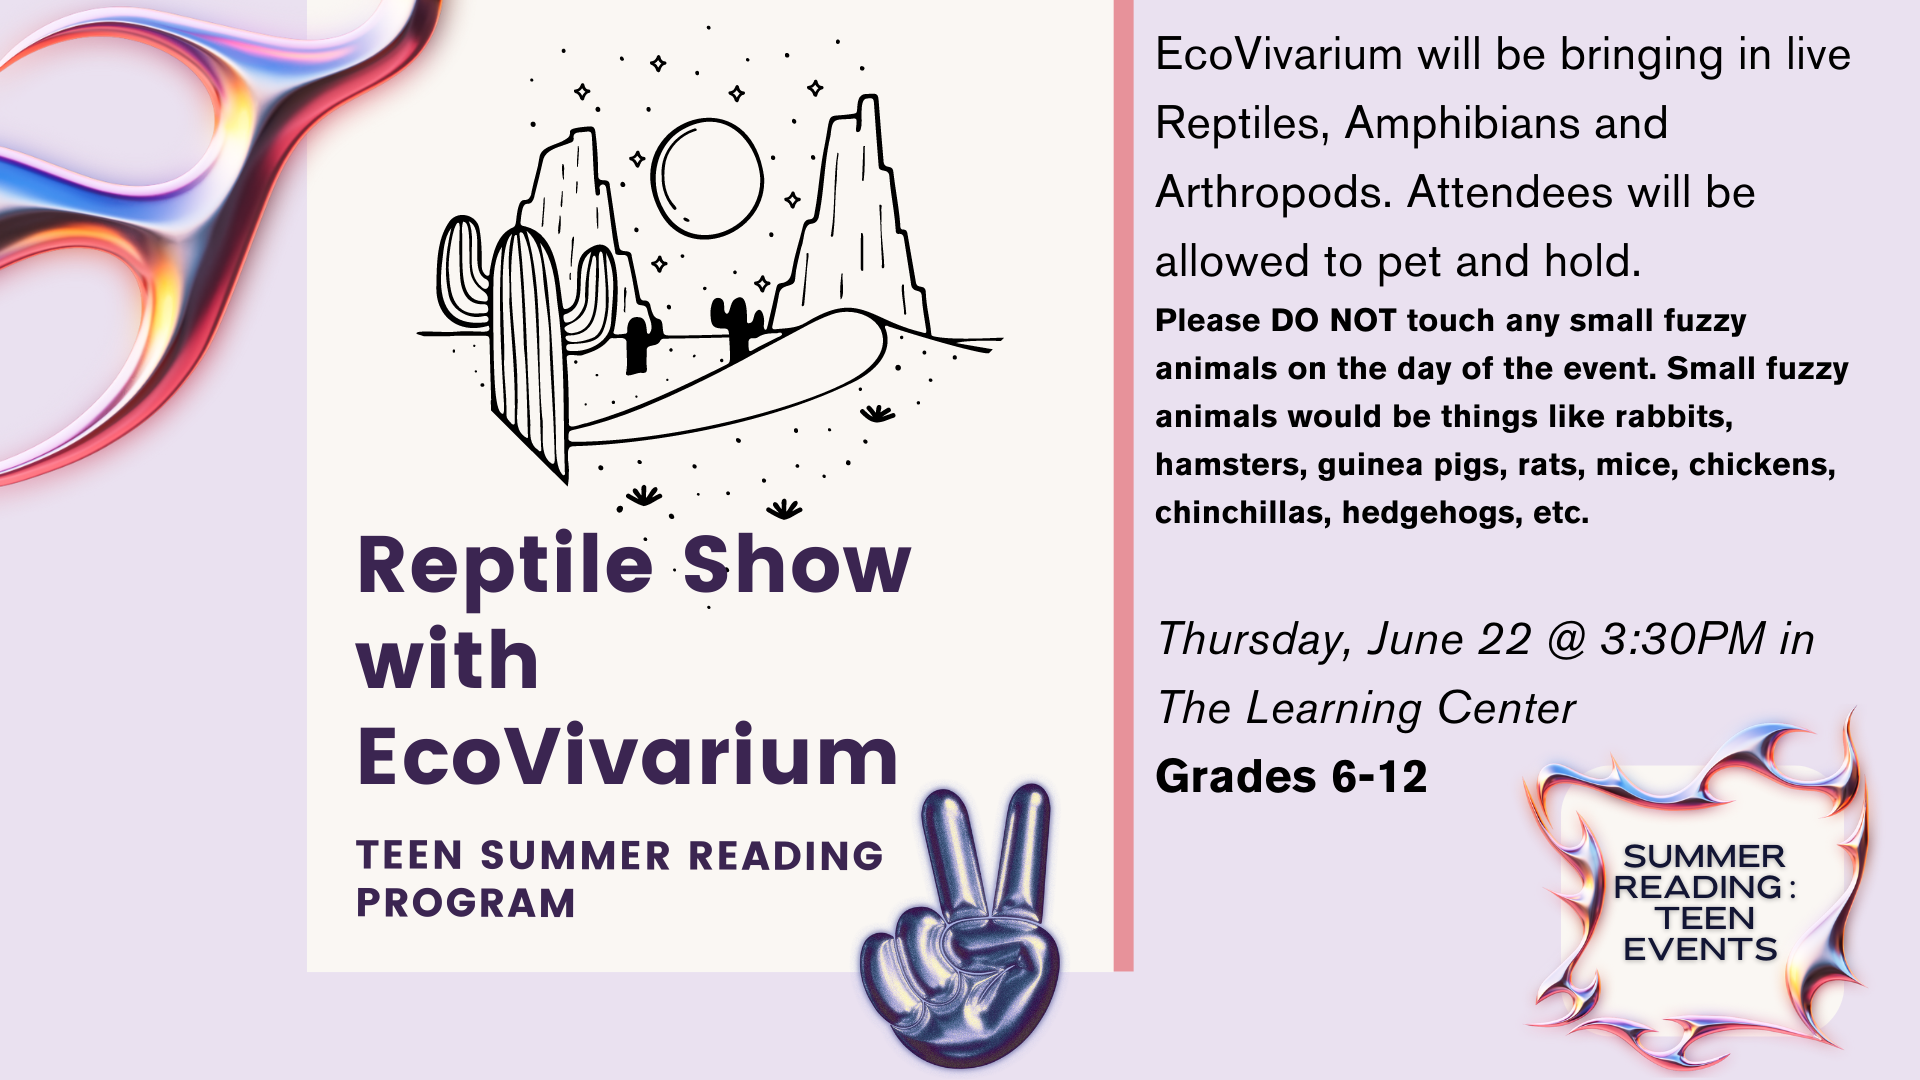 Teen Summer Reading Program: Reptile Show with Ecovivarium June 22 3:30 PM    